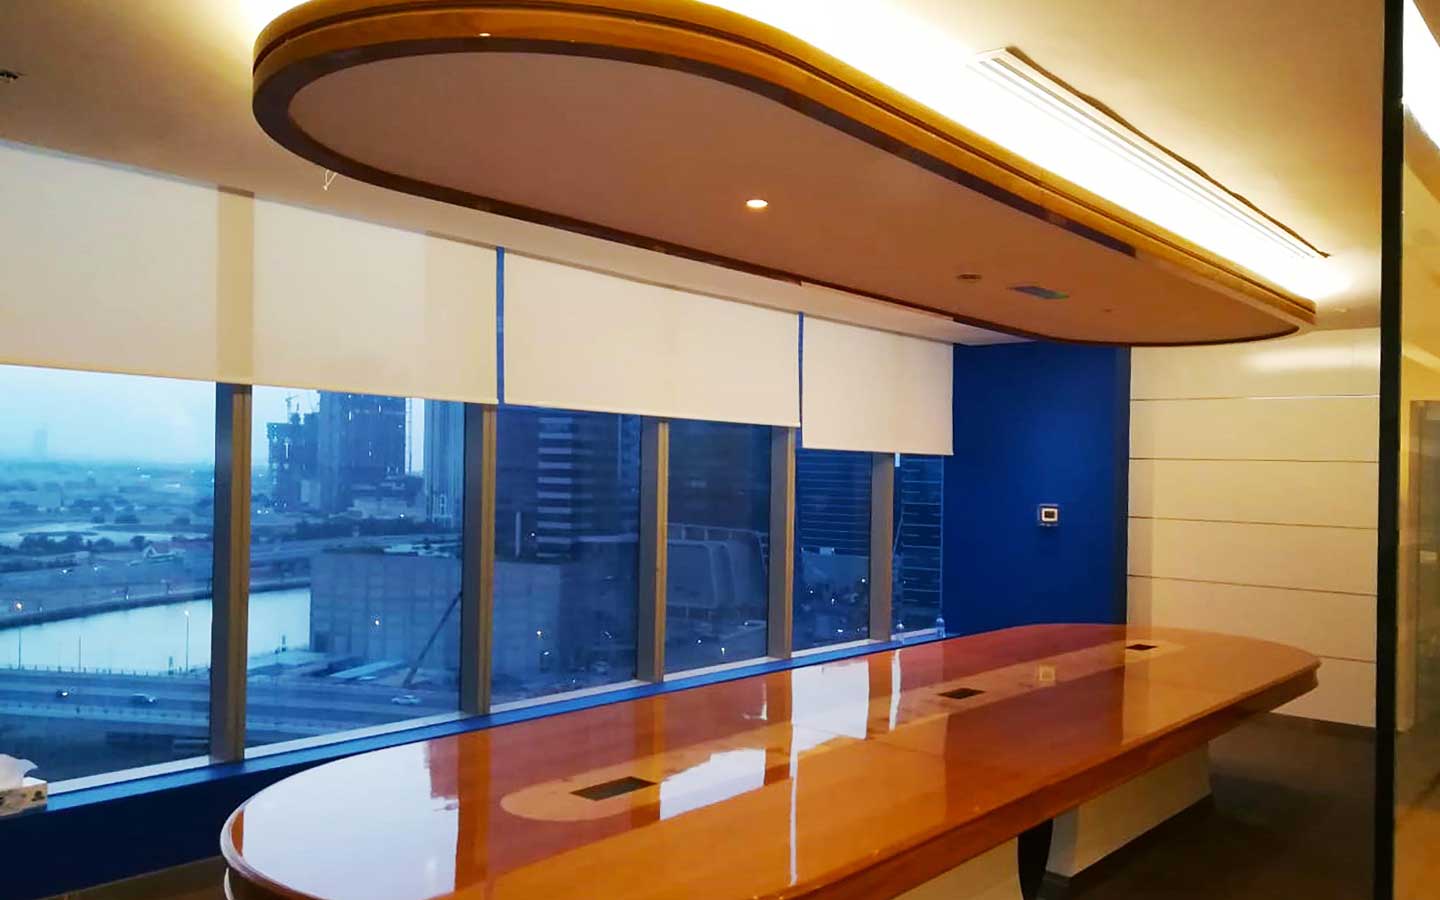 kandas interior fitout project - office interior design - interior fit out company in dubai